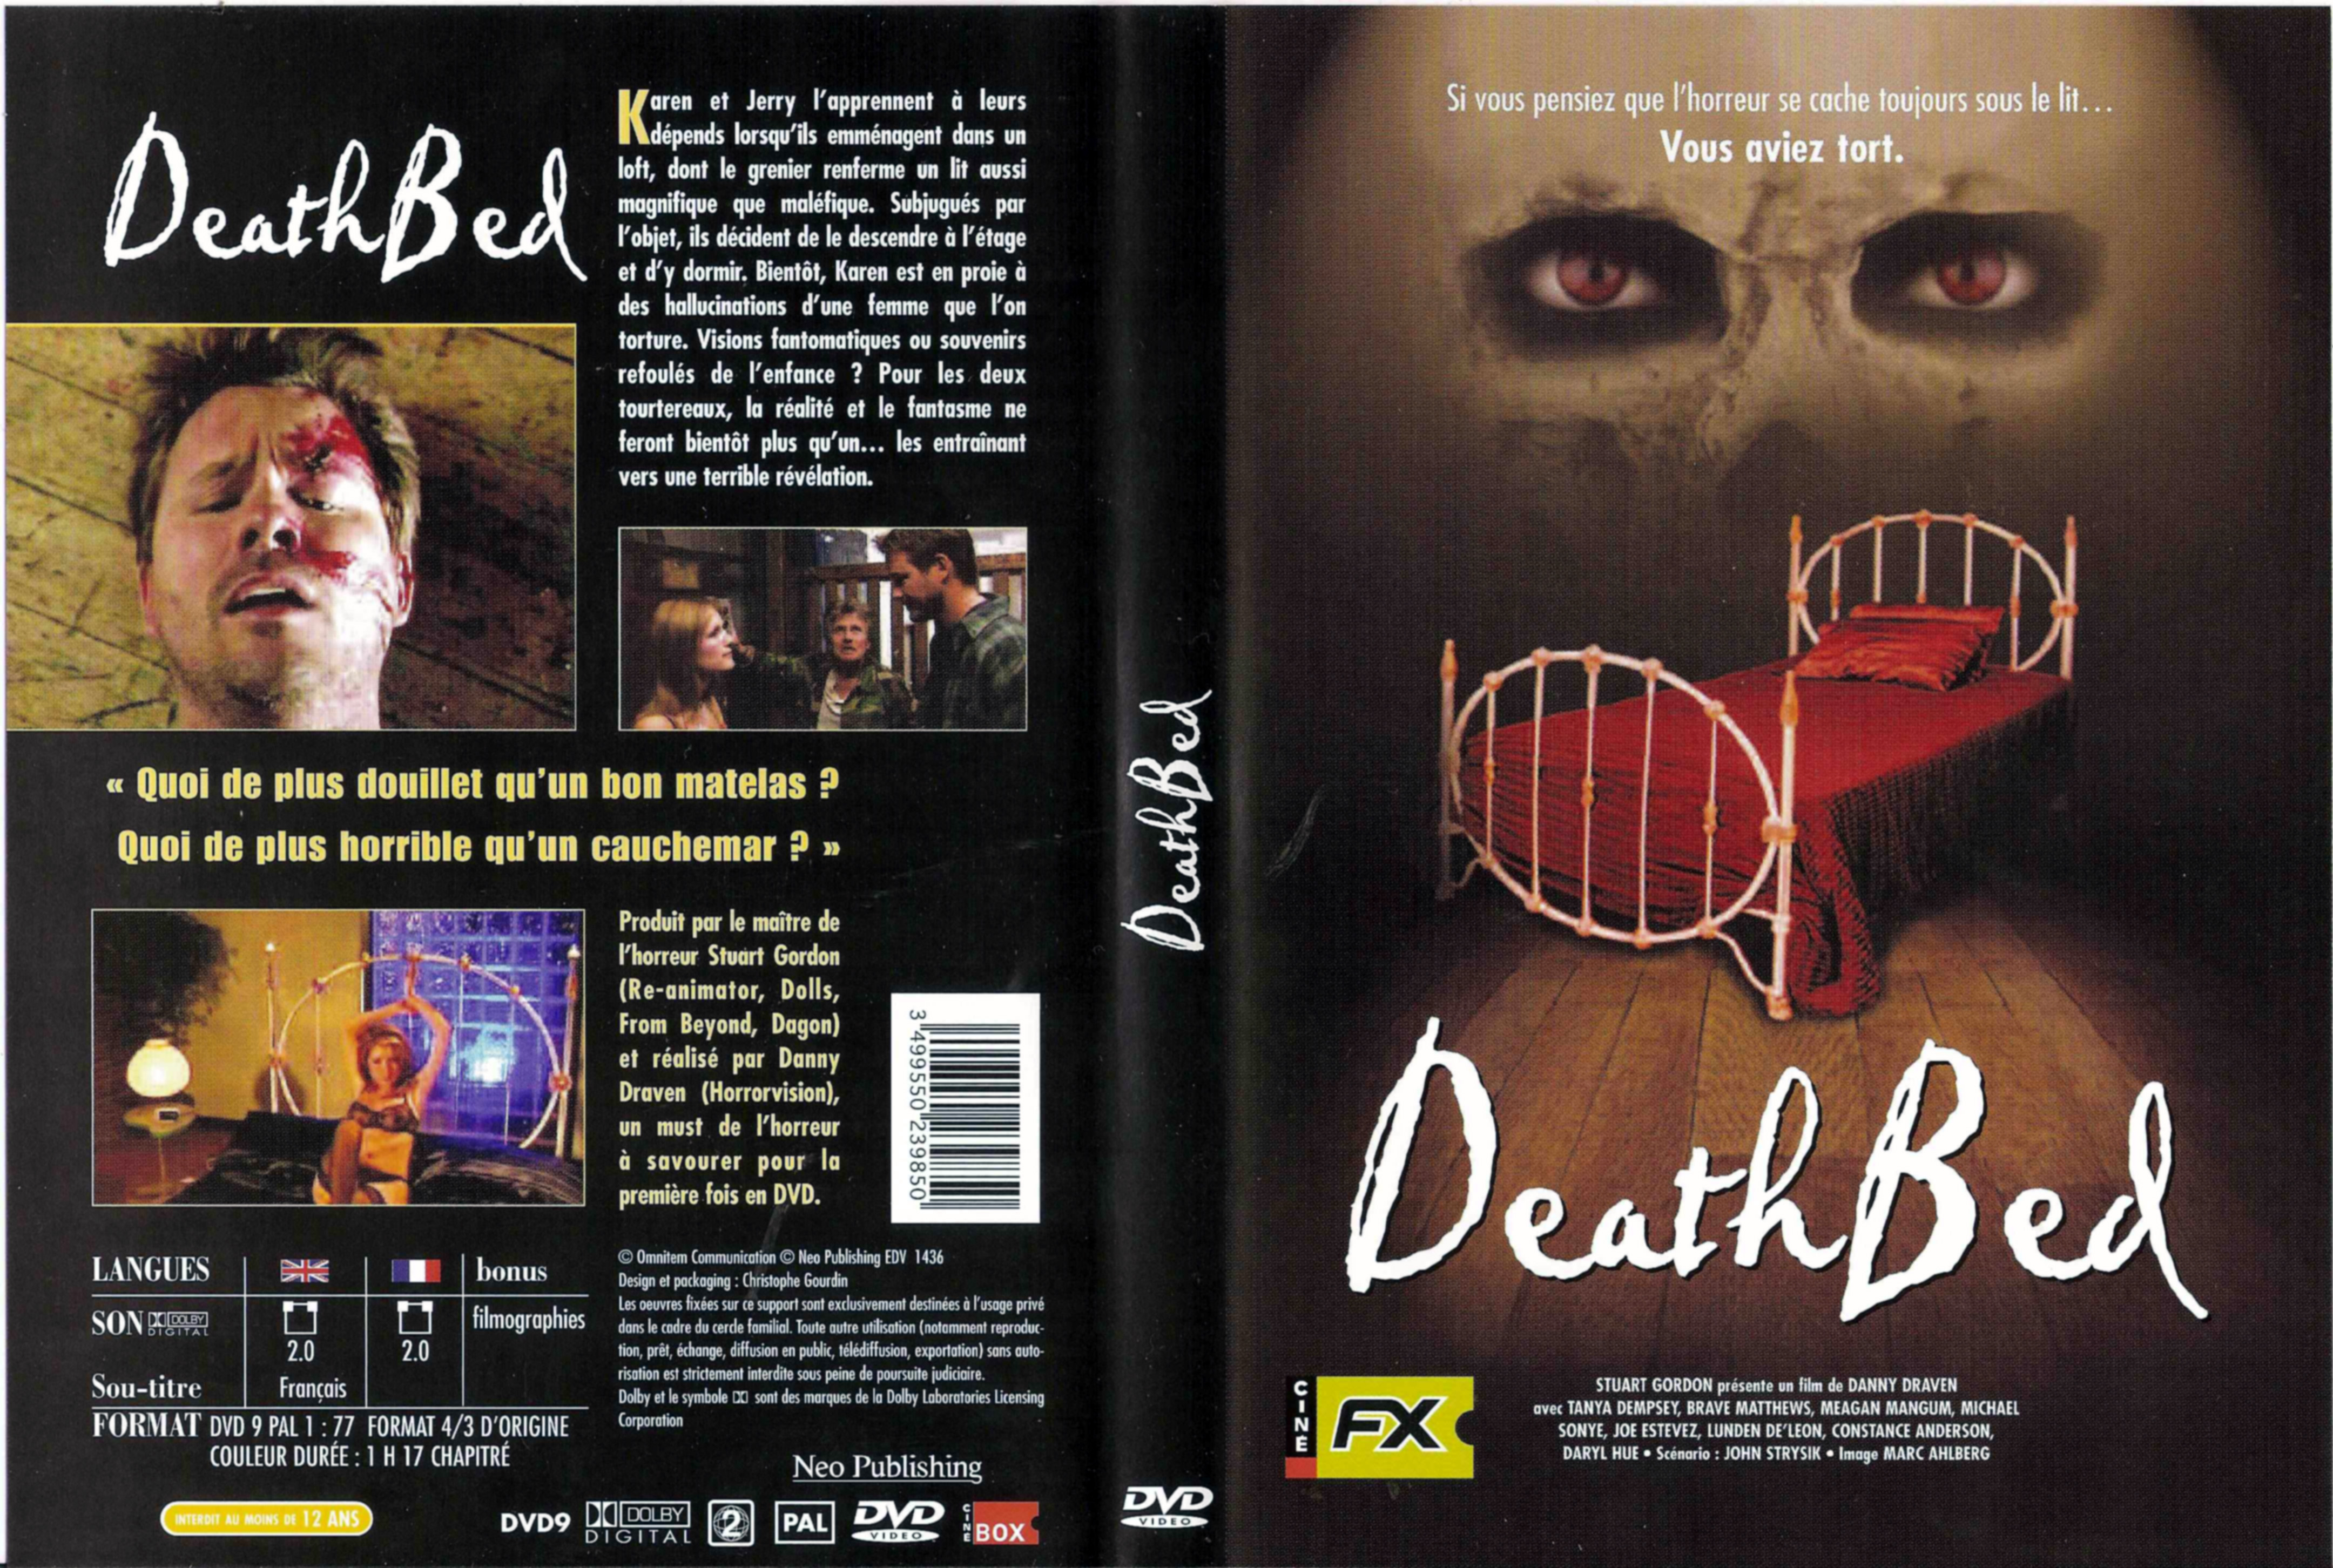 Jaquette DVD Death Bed